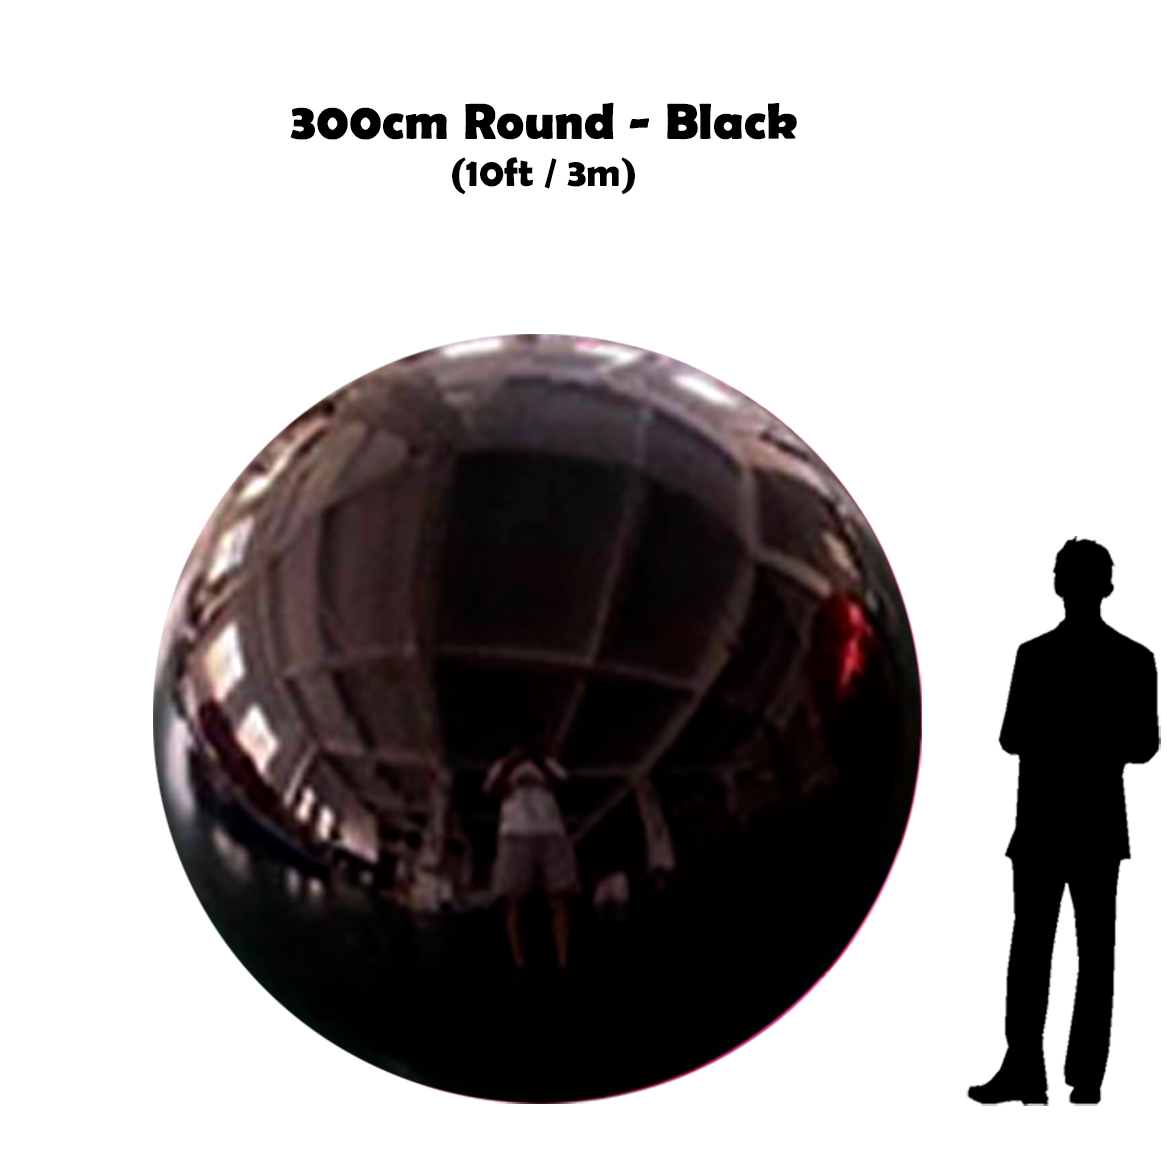 300cm Big Black ball beside 5'10 guy silhouette 